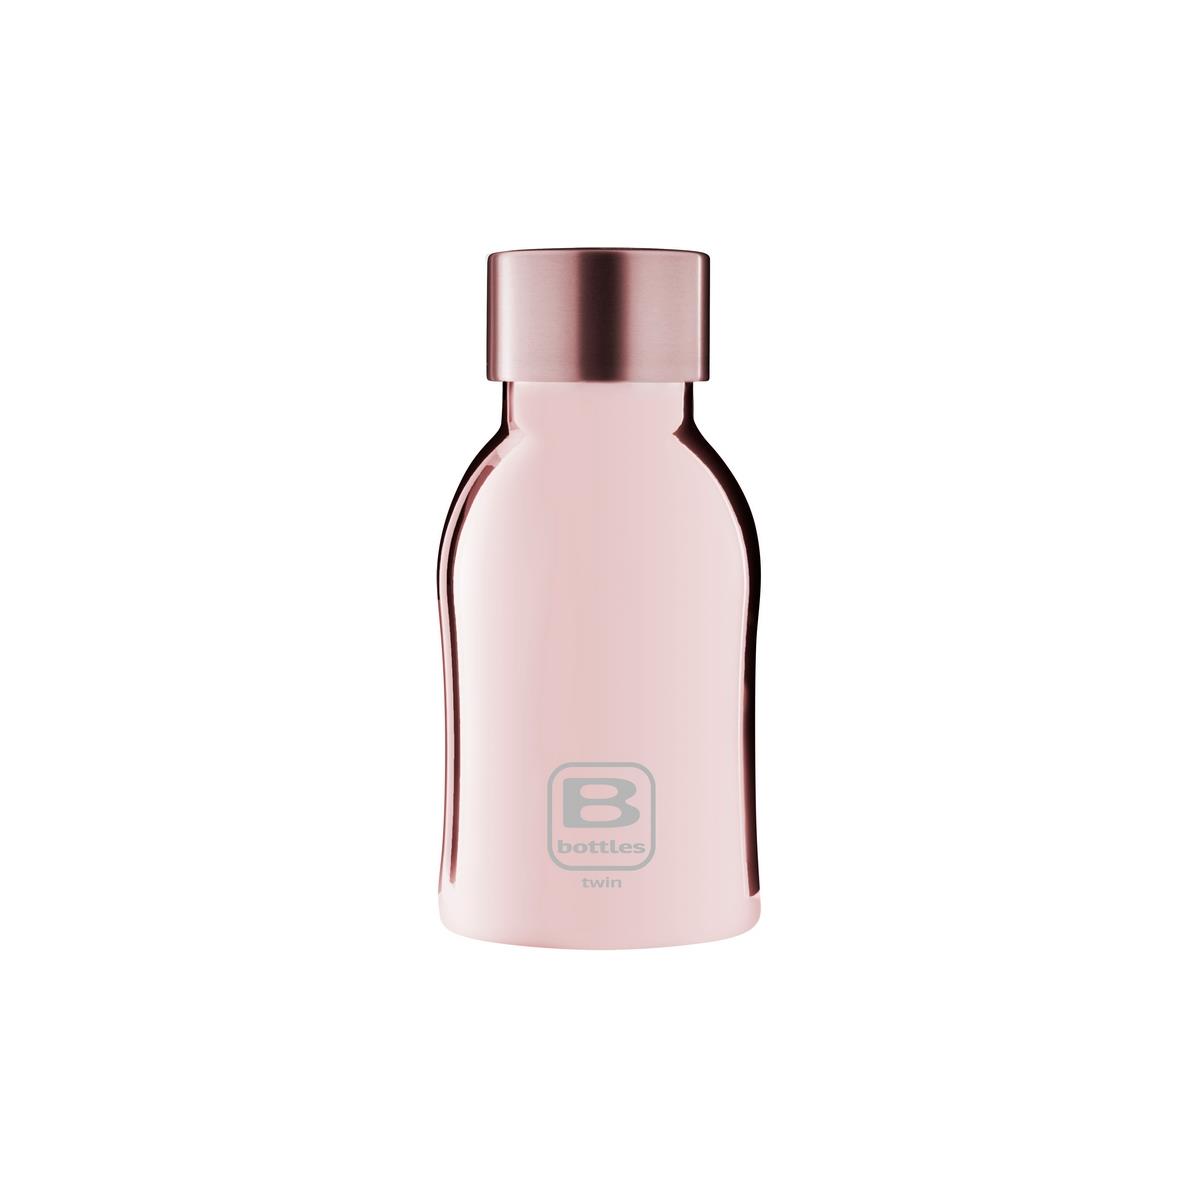 photo B Bottles Twin - Rose Gold Lux ????- 250 ml - Doppelwandige Thermoflasche aus Edelstahl 18/10